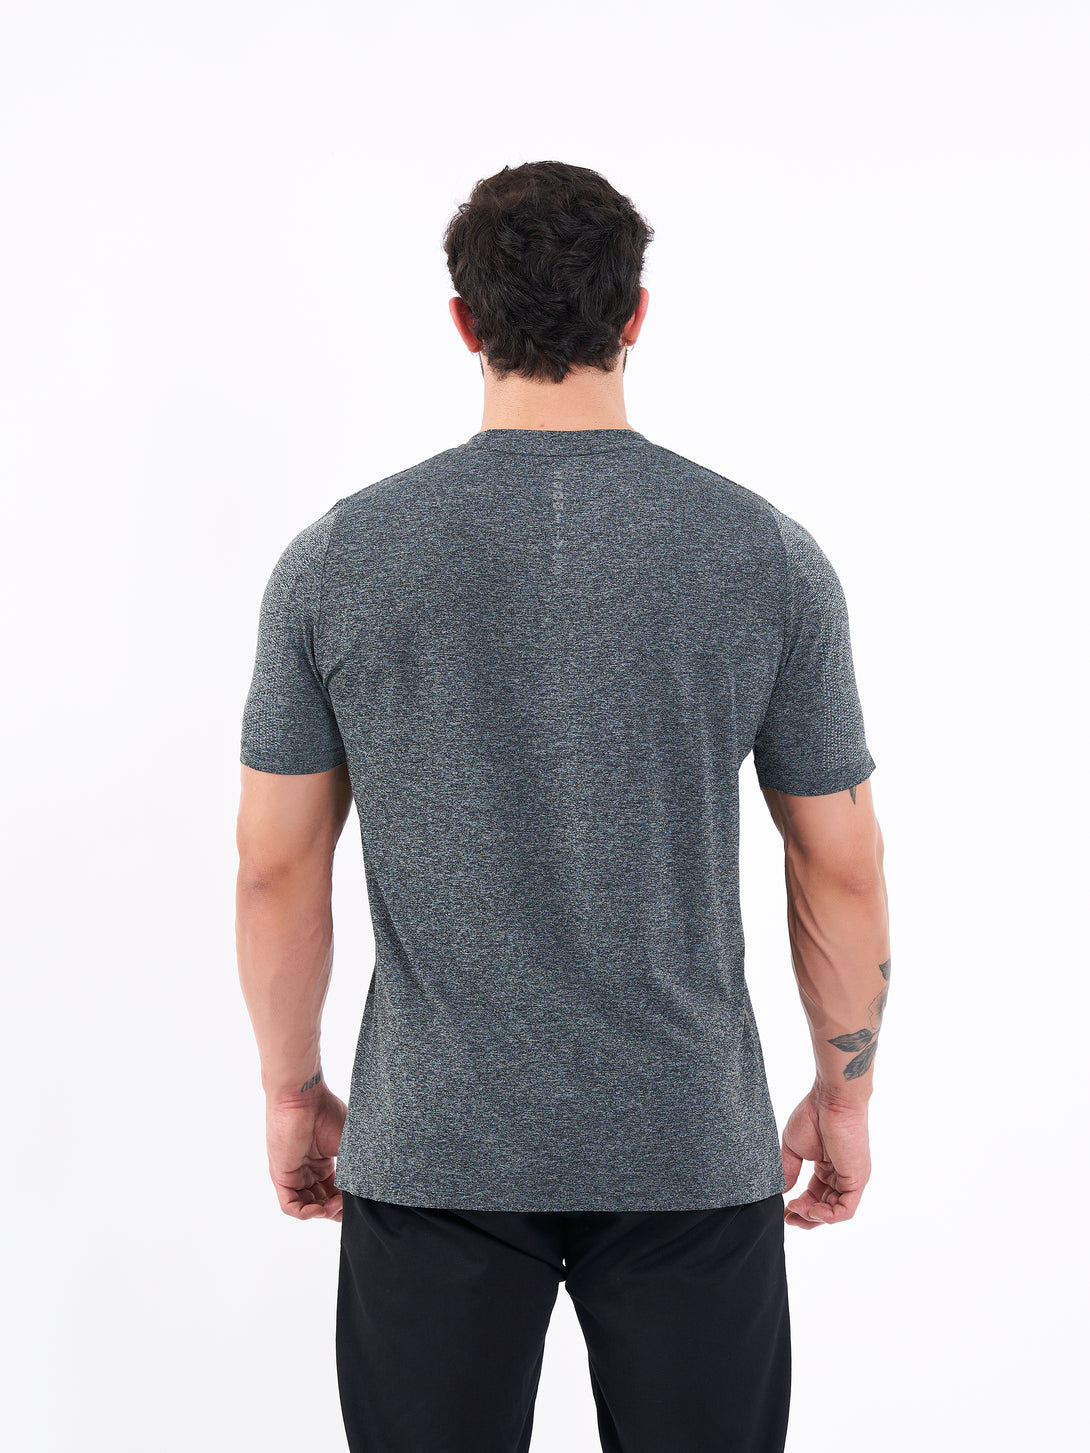 A Man Wearing Deep Black Color Unisex Seamless Melange T-Shirt. Enhanced Comfort